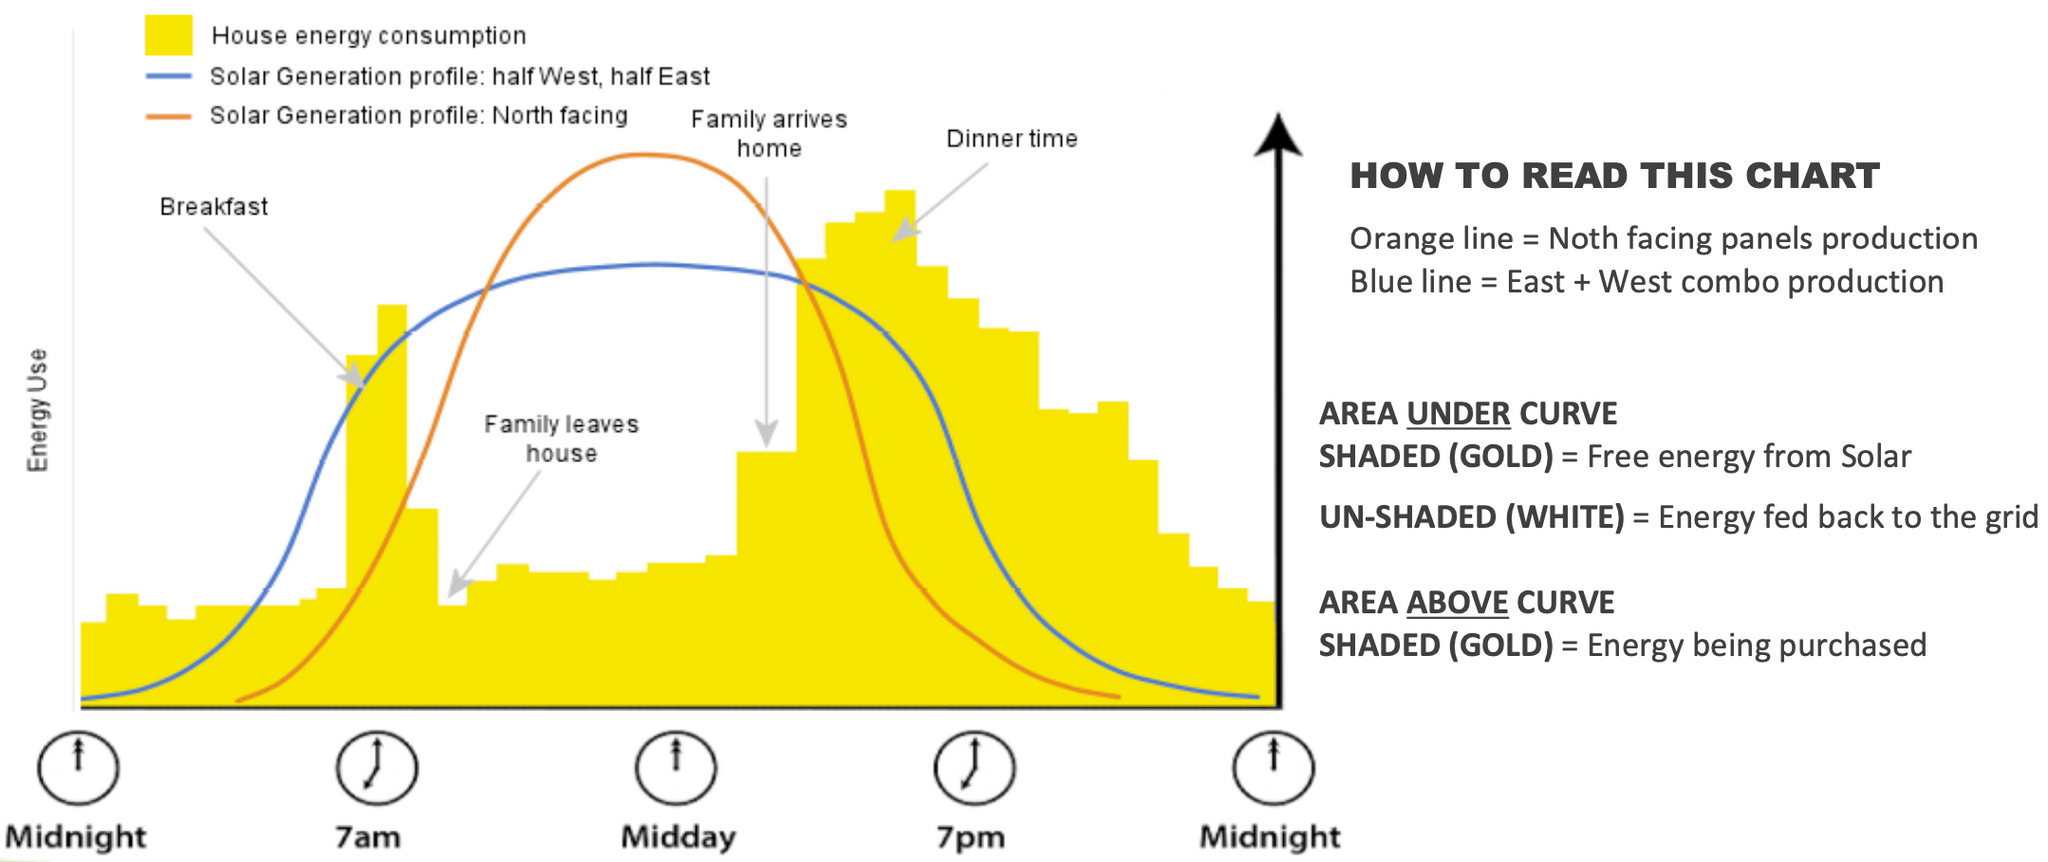 Solar energy consumption explained through visual representation